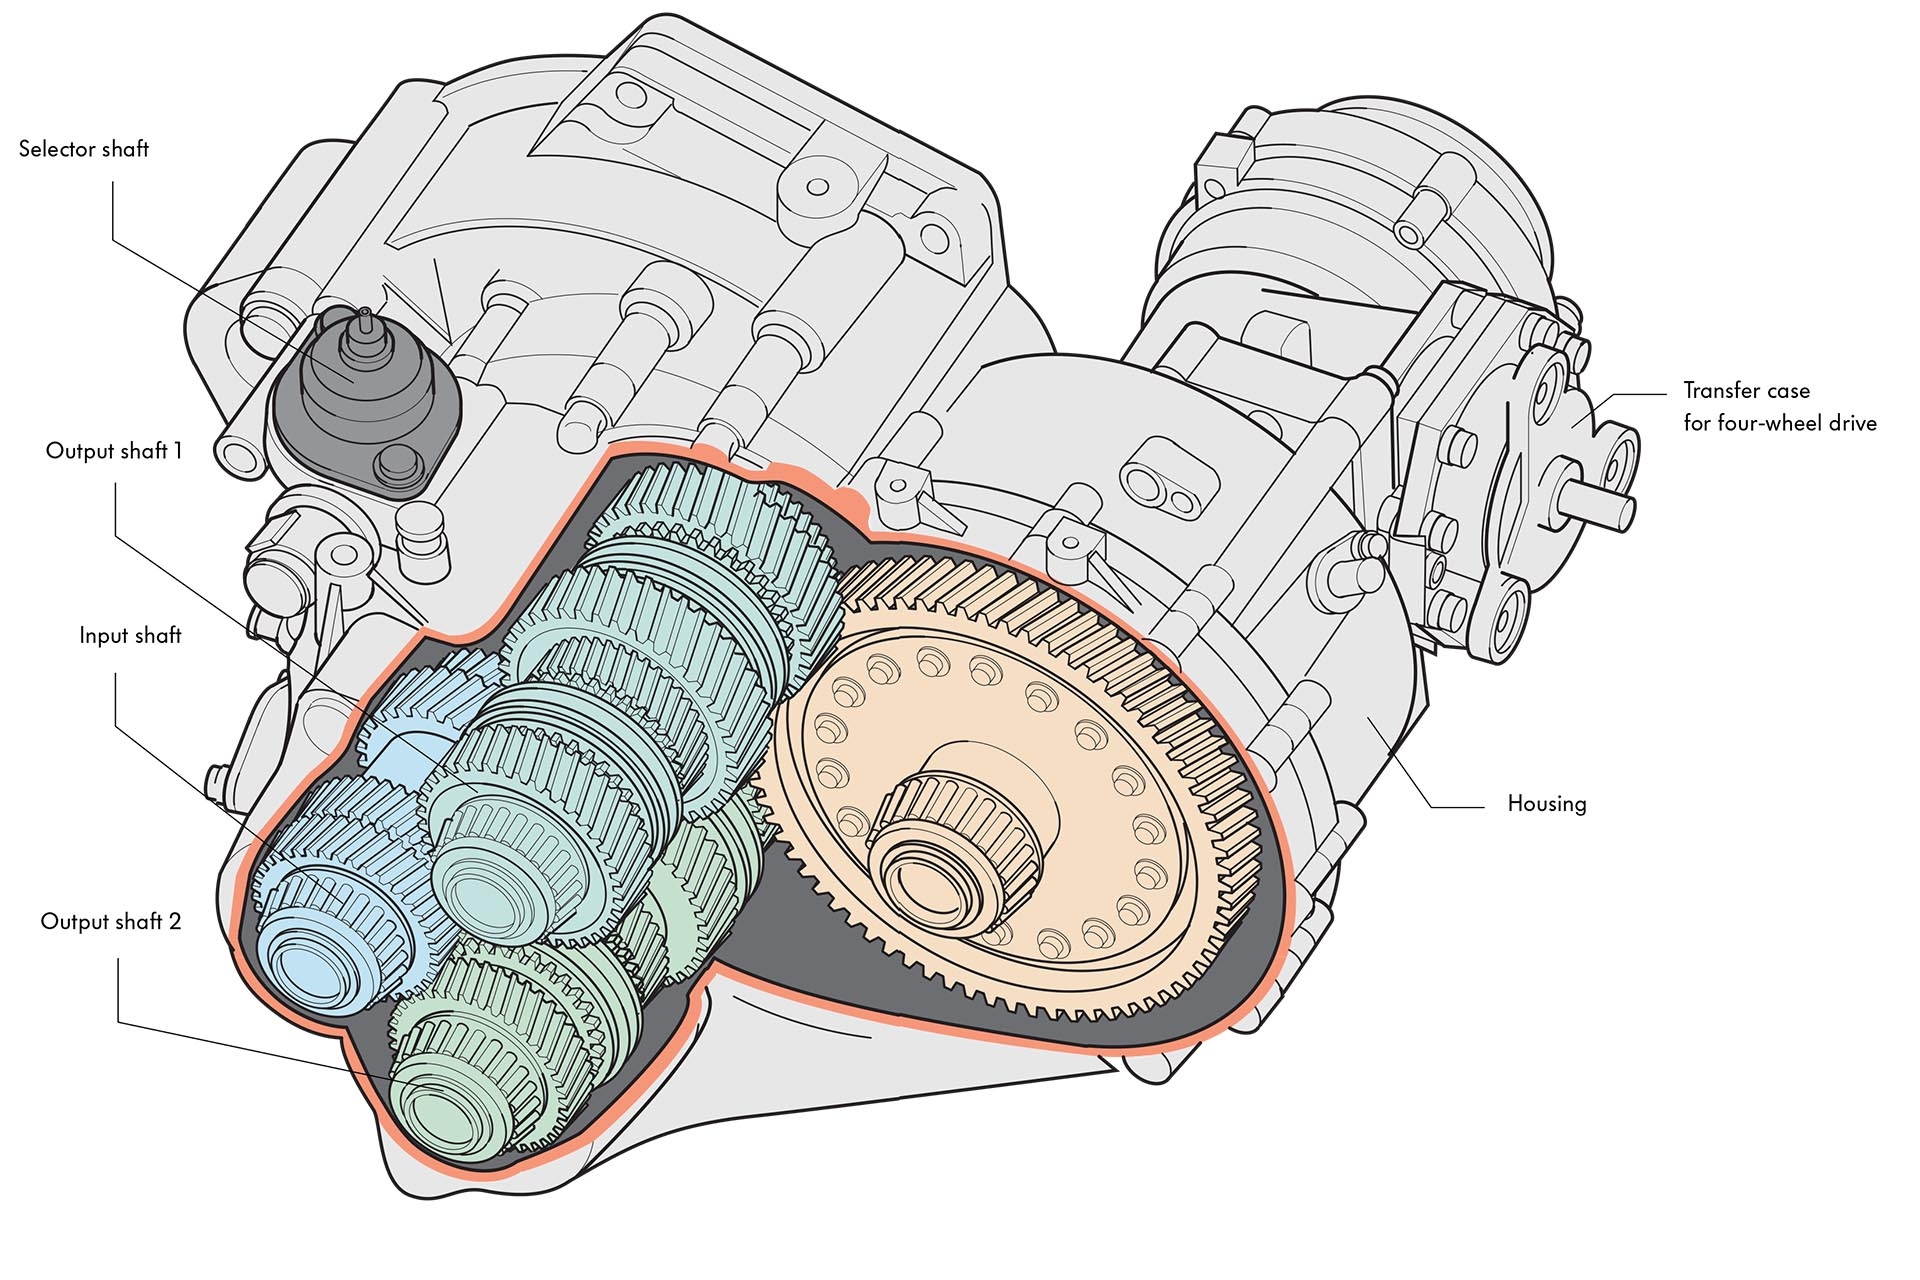 03_VW 02M 6-speed transmission internal technical drawing